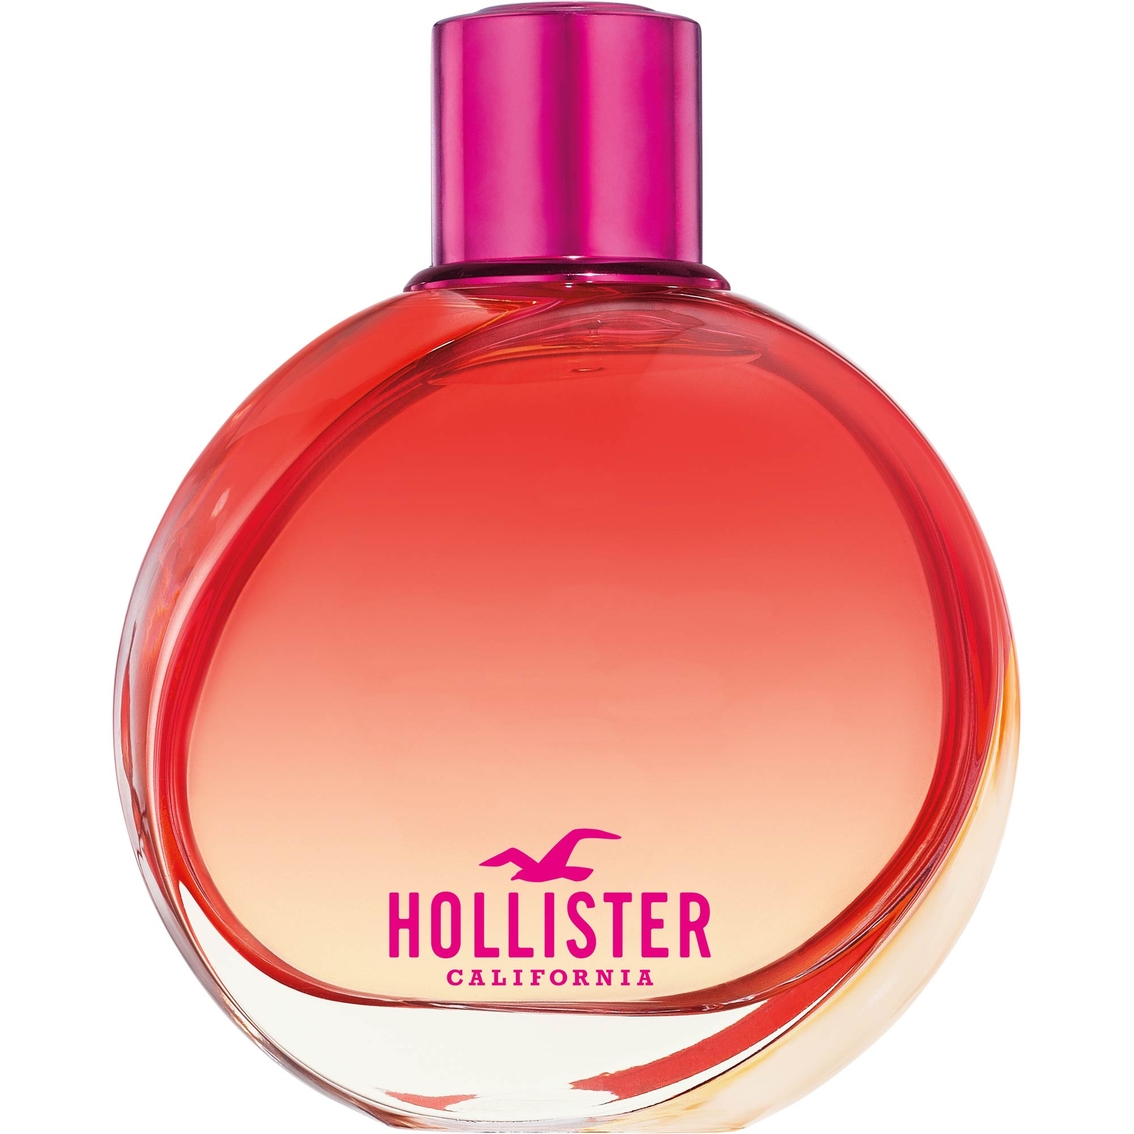 hollister parfume wave 2